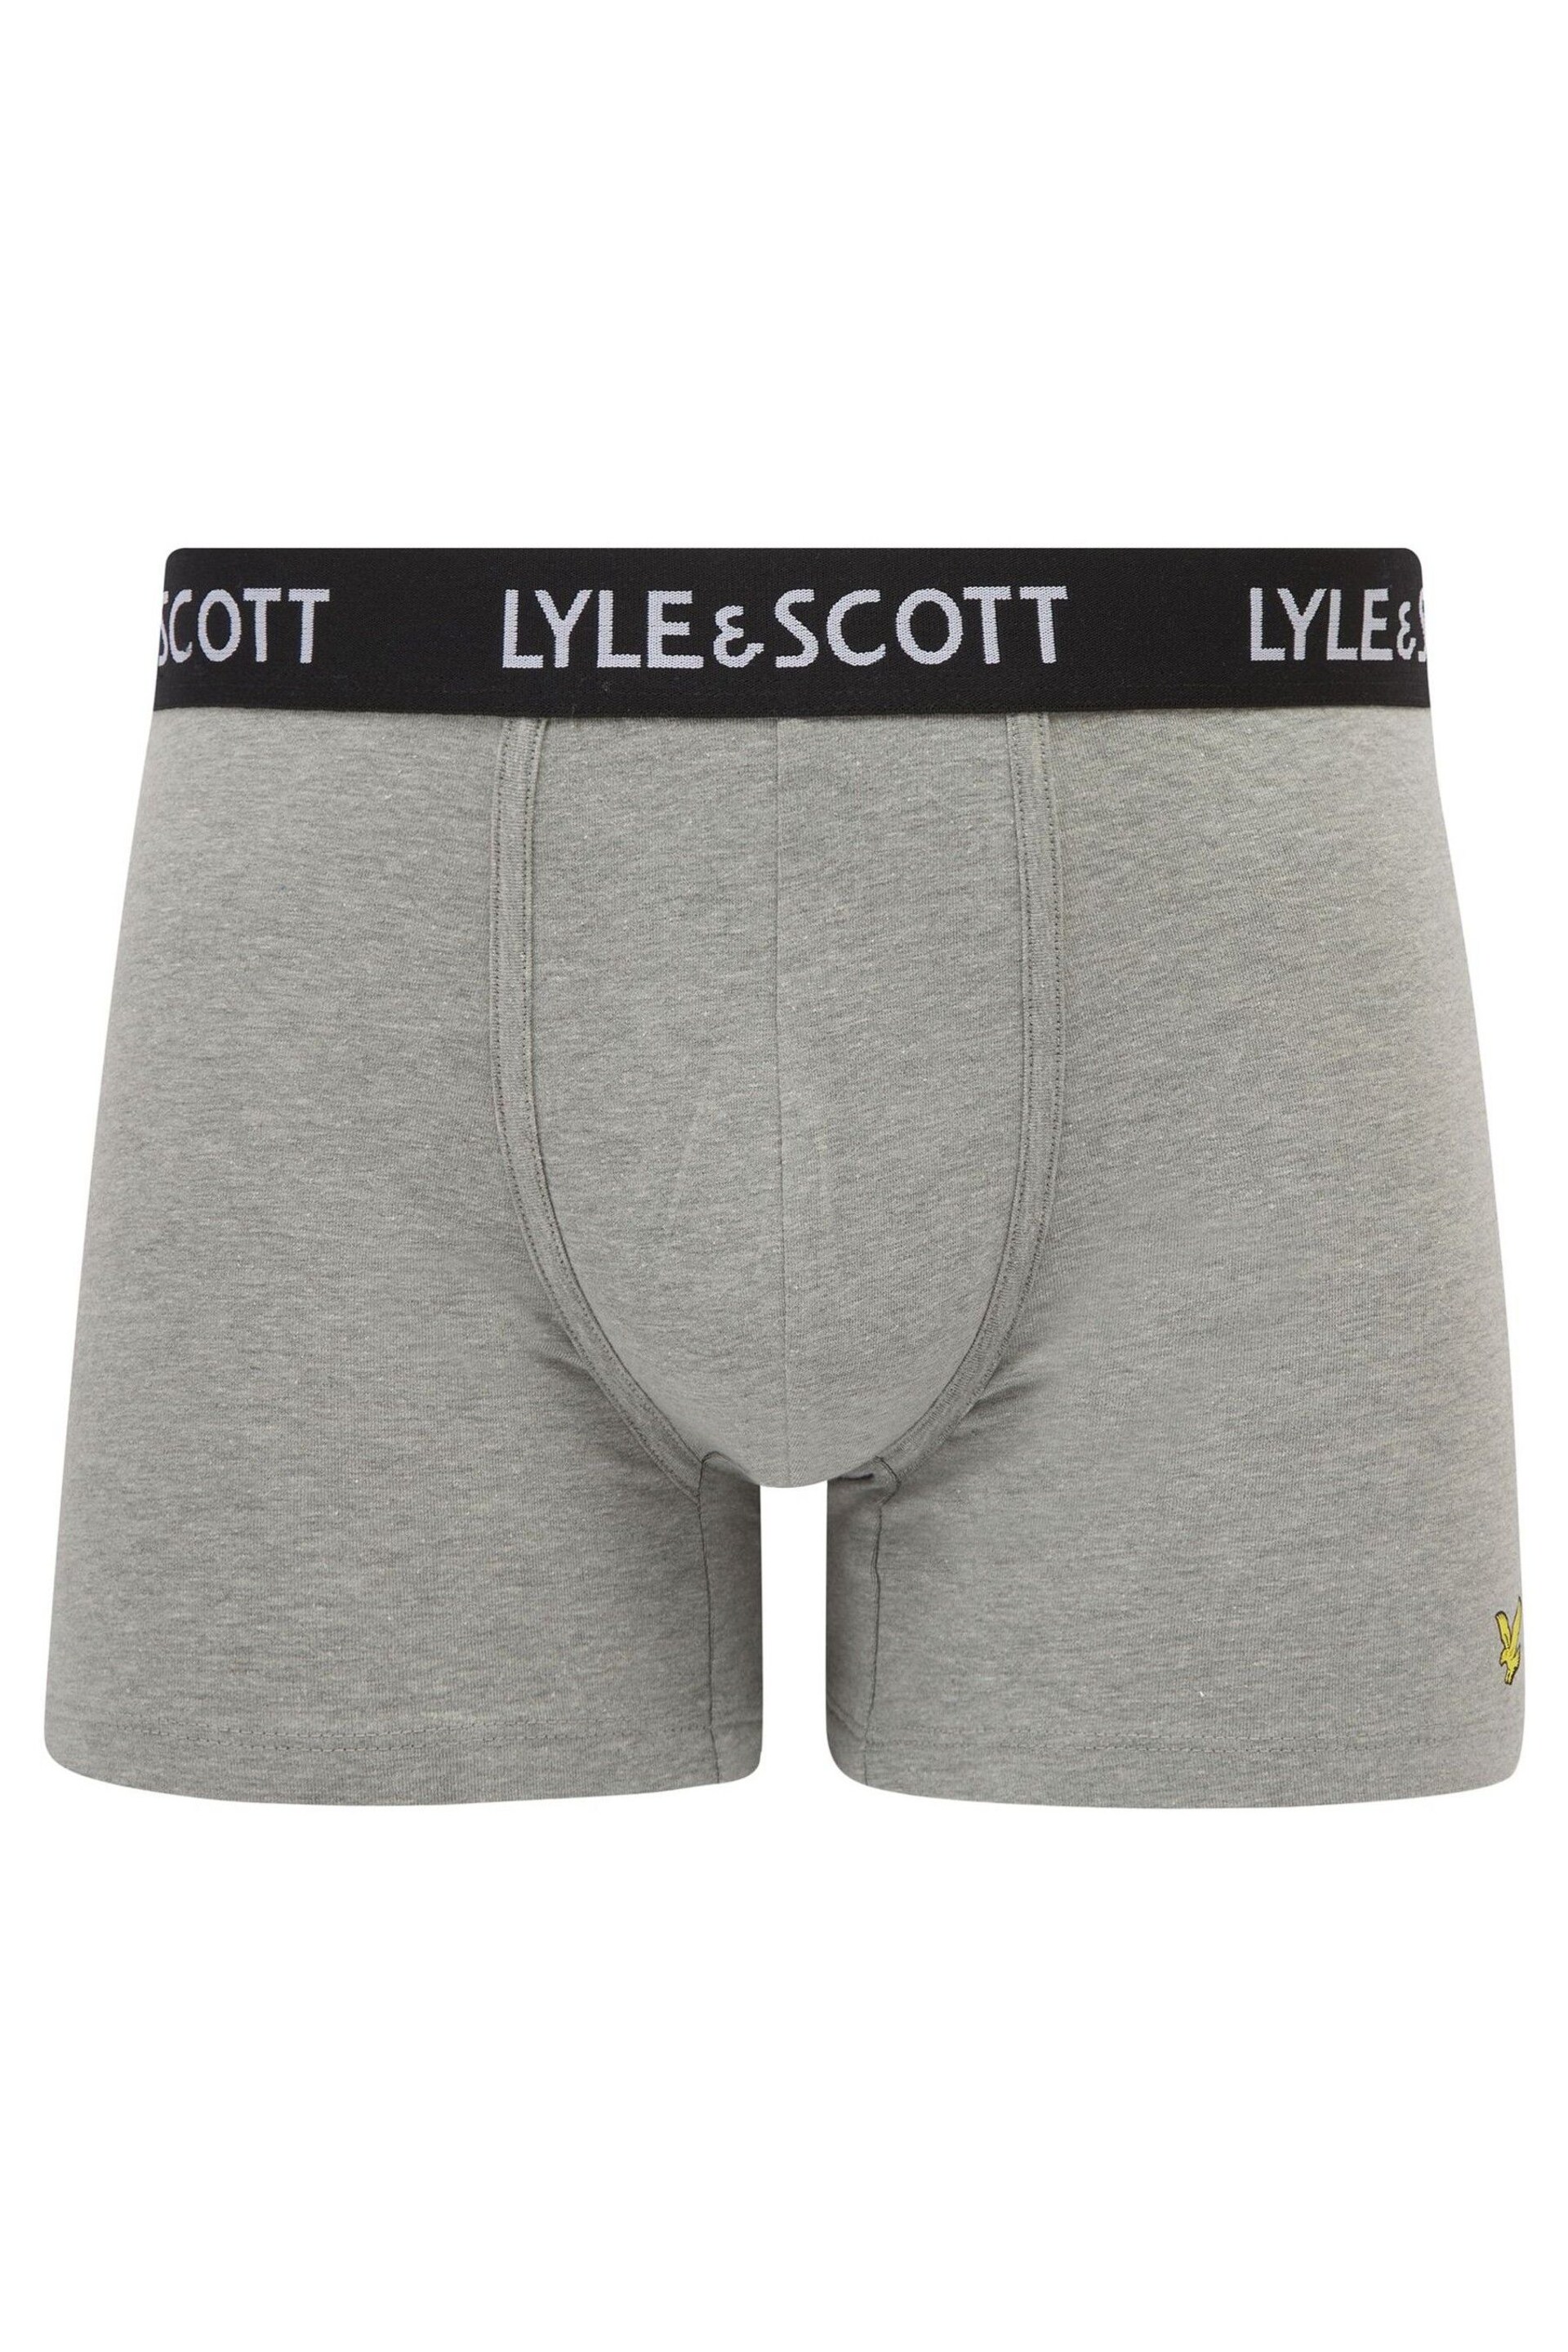 Lyle & Scott Multi Ethan Premium Underwear Trunks 3 Pack - Image 4 of 4